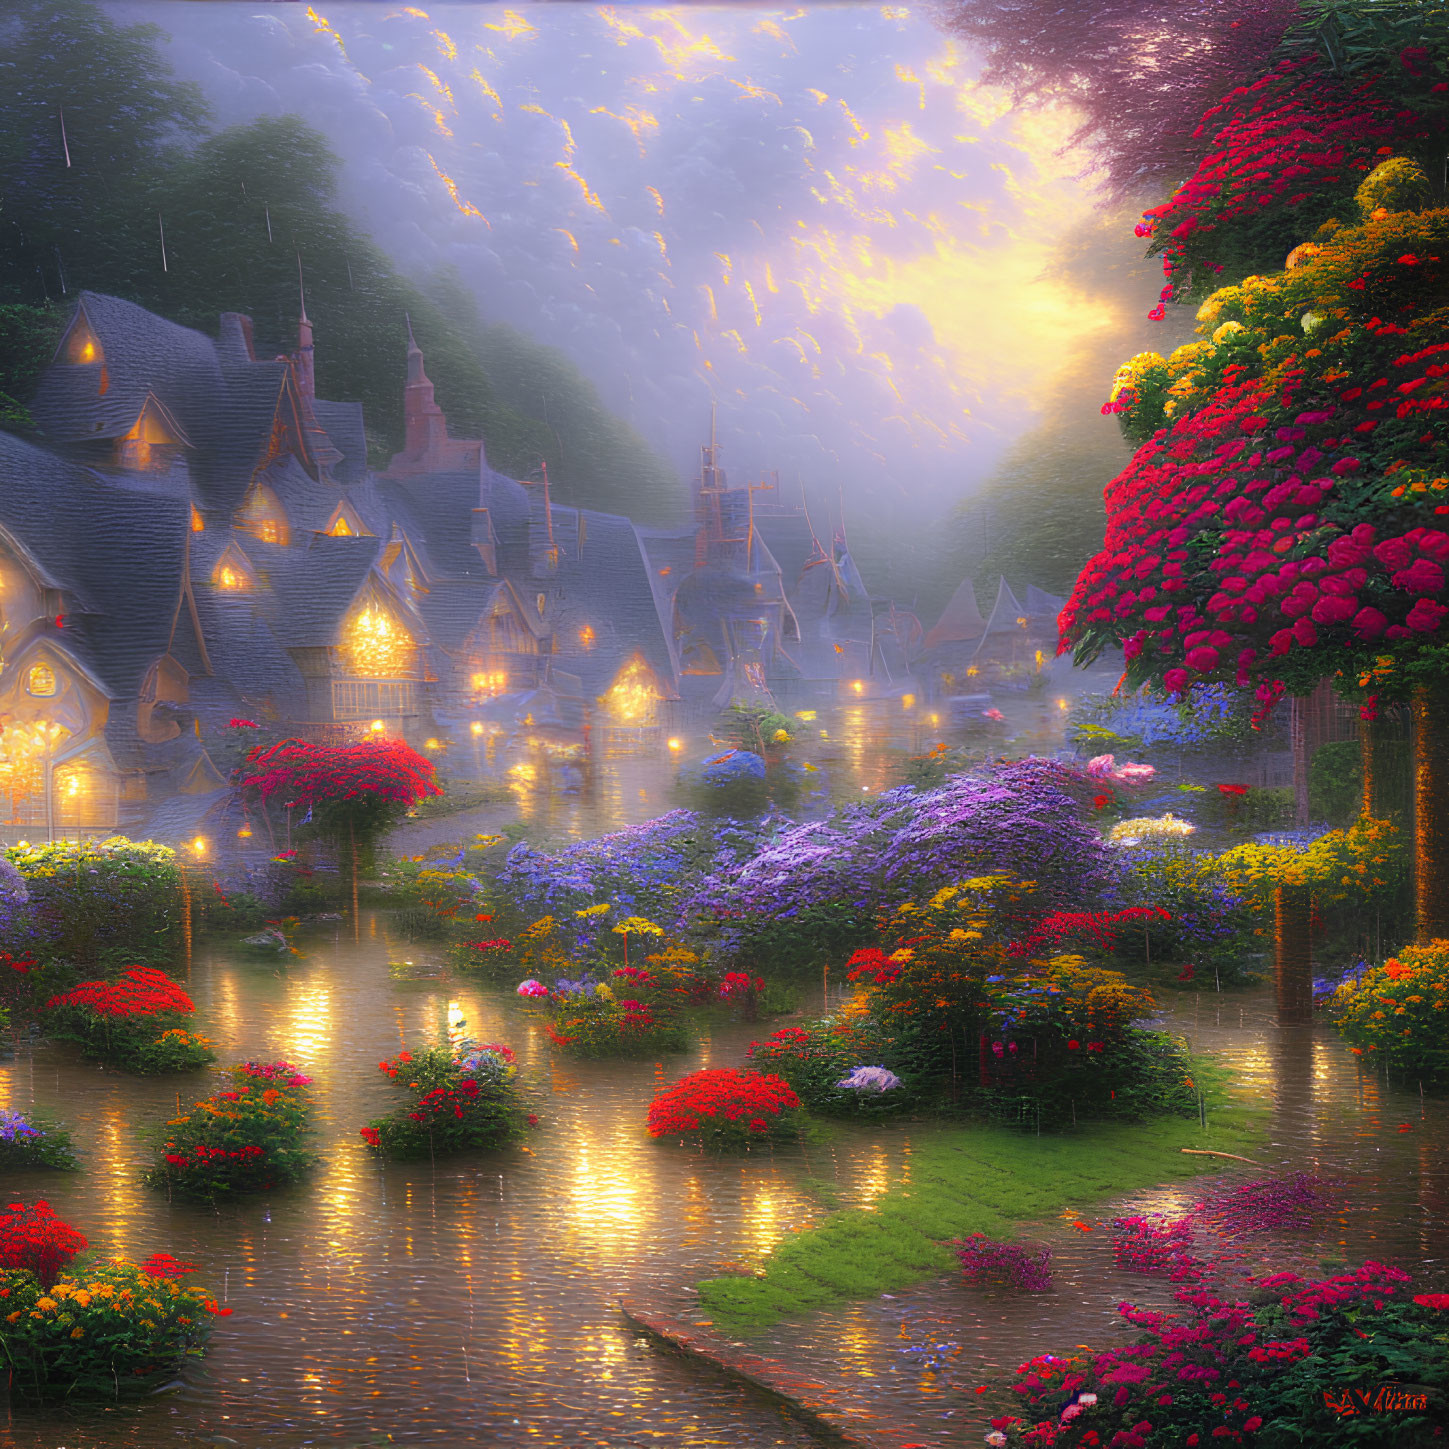 Enchanting village with glowing windows in lush garden setting